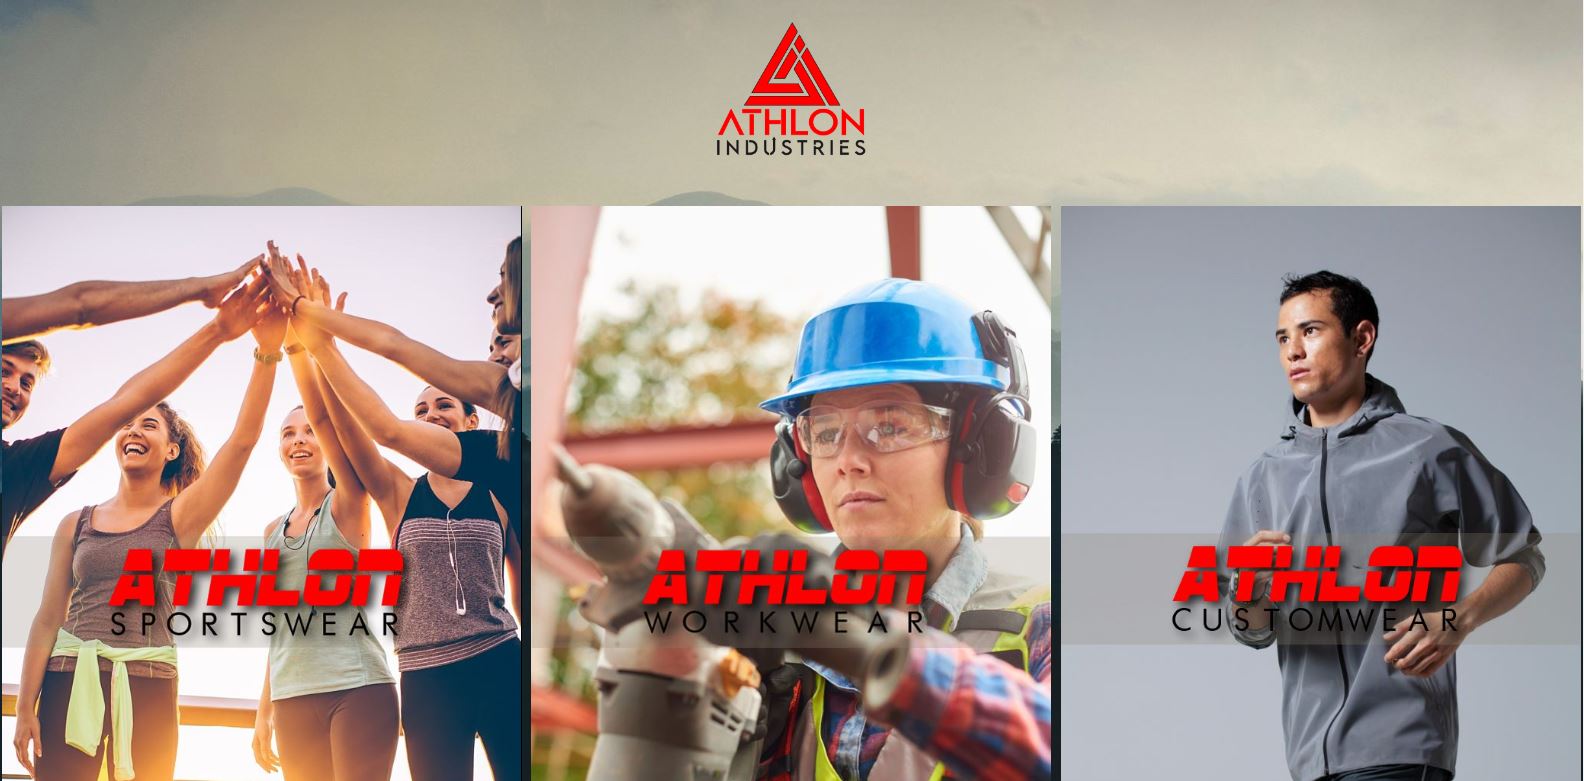 Athlon Industries